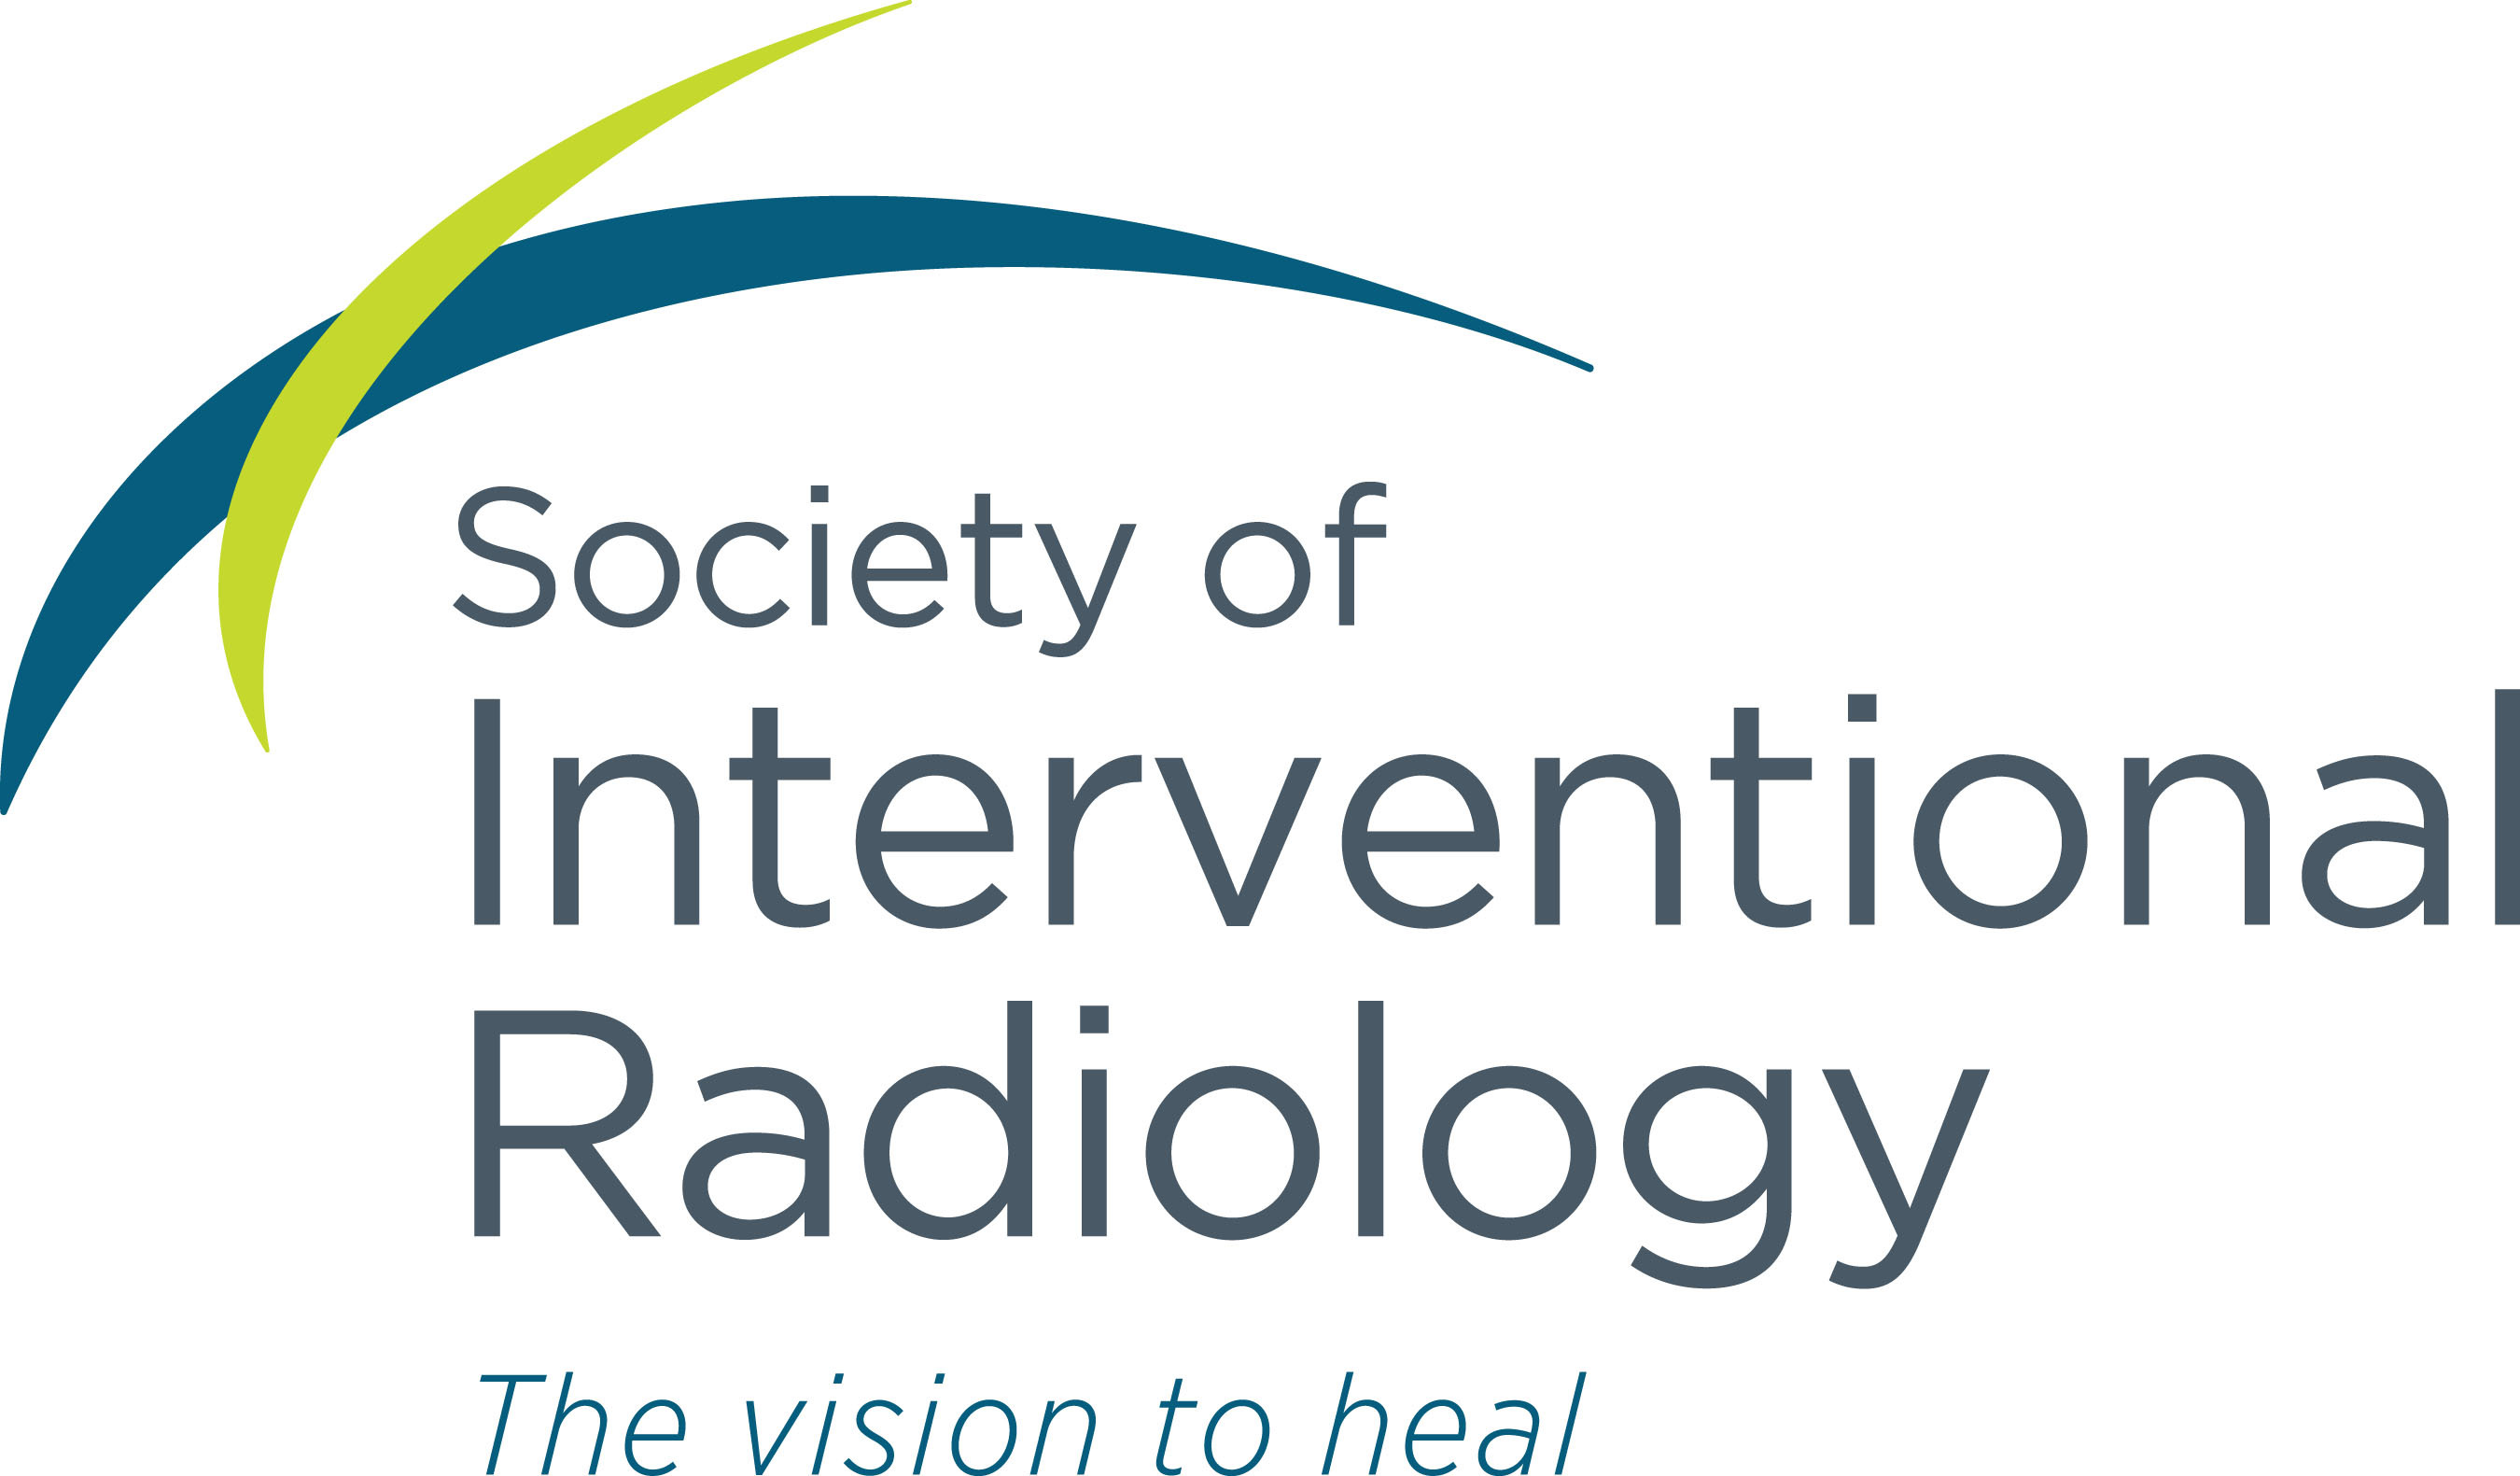 Society of Interventional Radiology. (PRNewsFoto/Society of Interventional Radiology) (PRNewsFoto/)